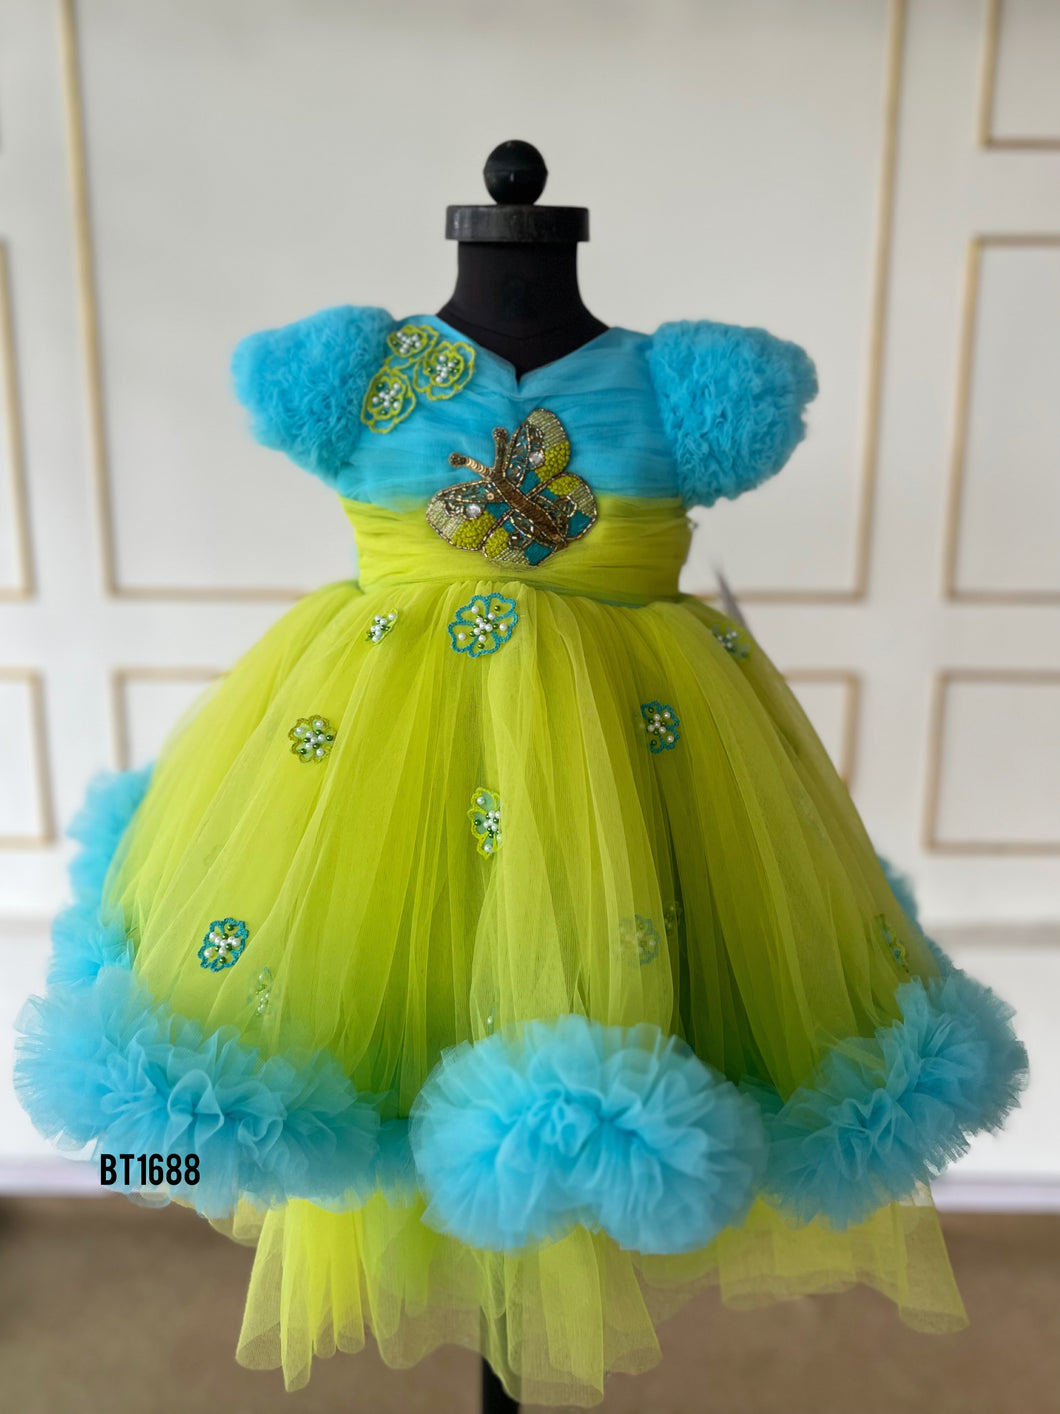 BT1688 Enchanted Garden Princess Baby Party Dress